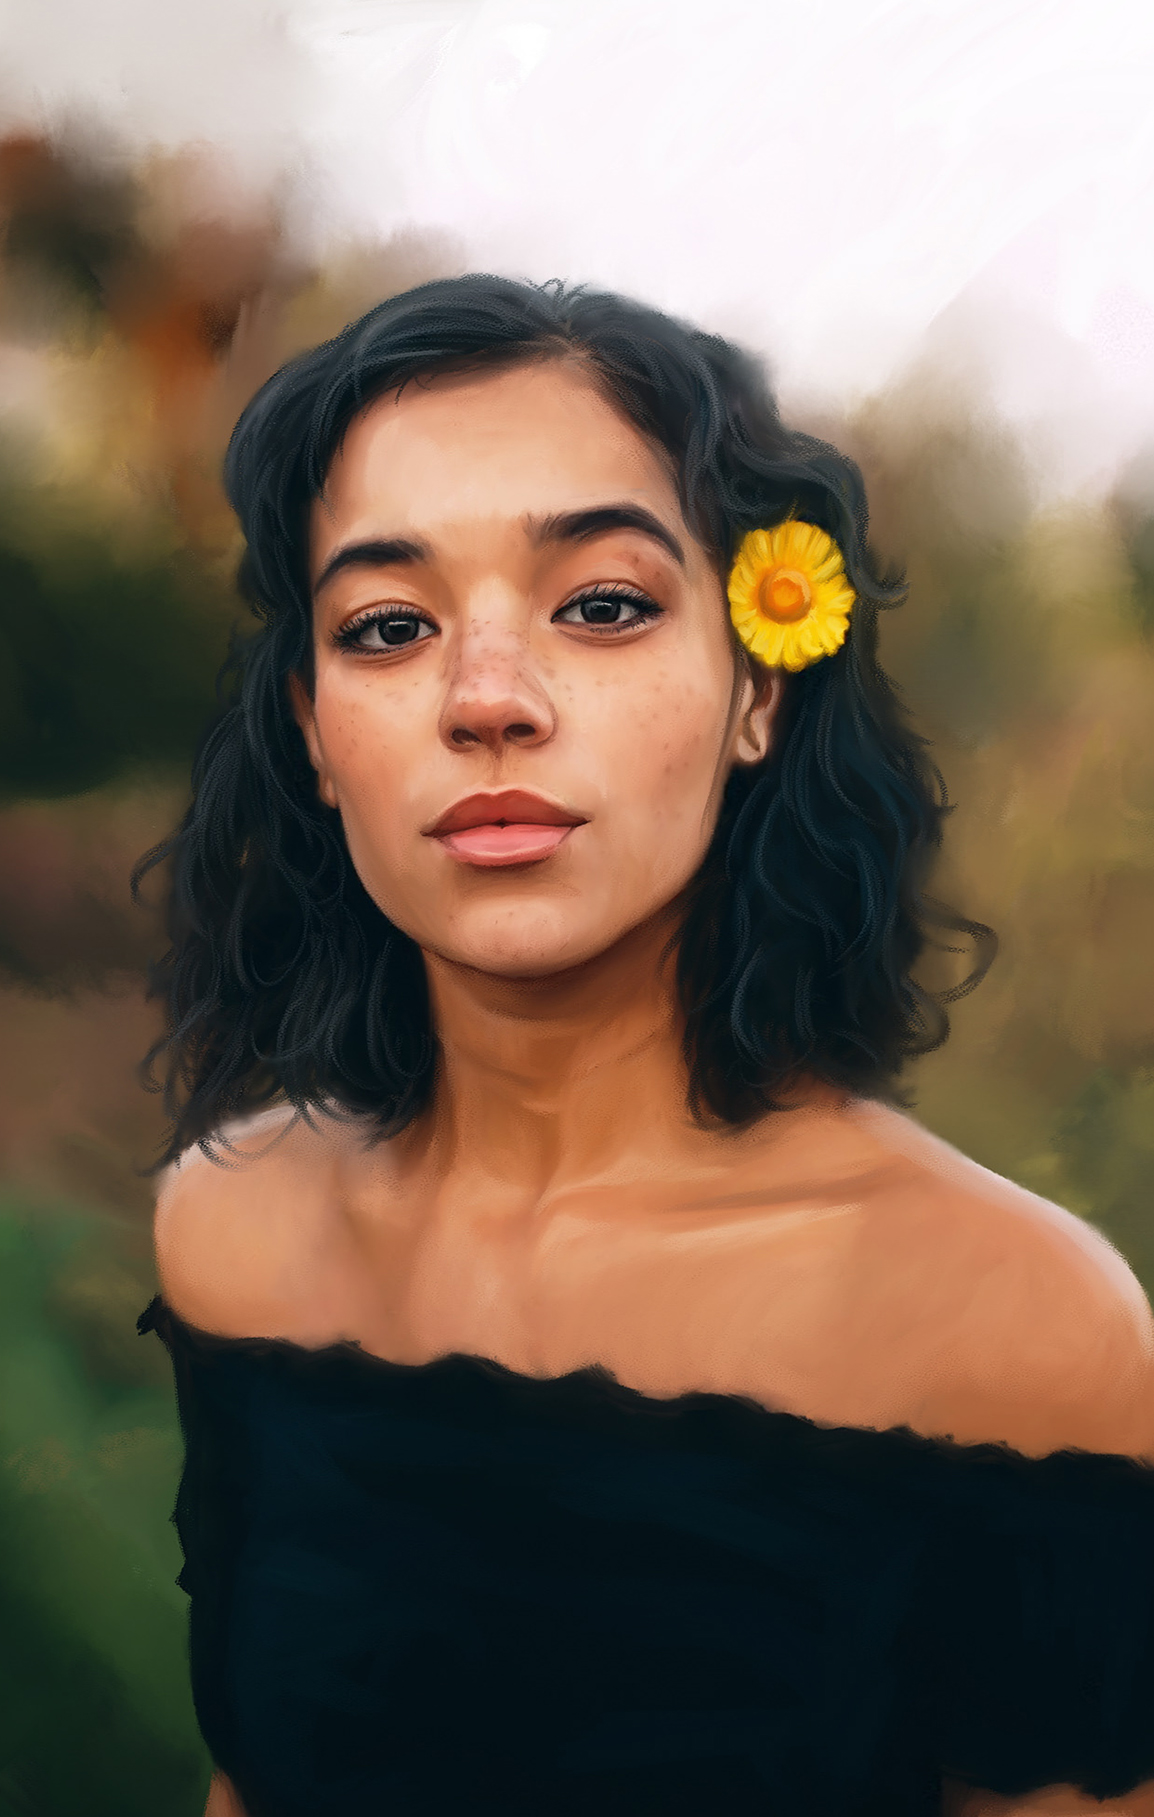 Realistic Digital Portrait